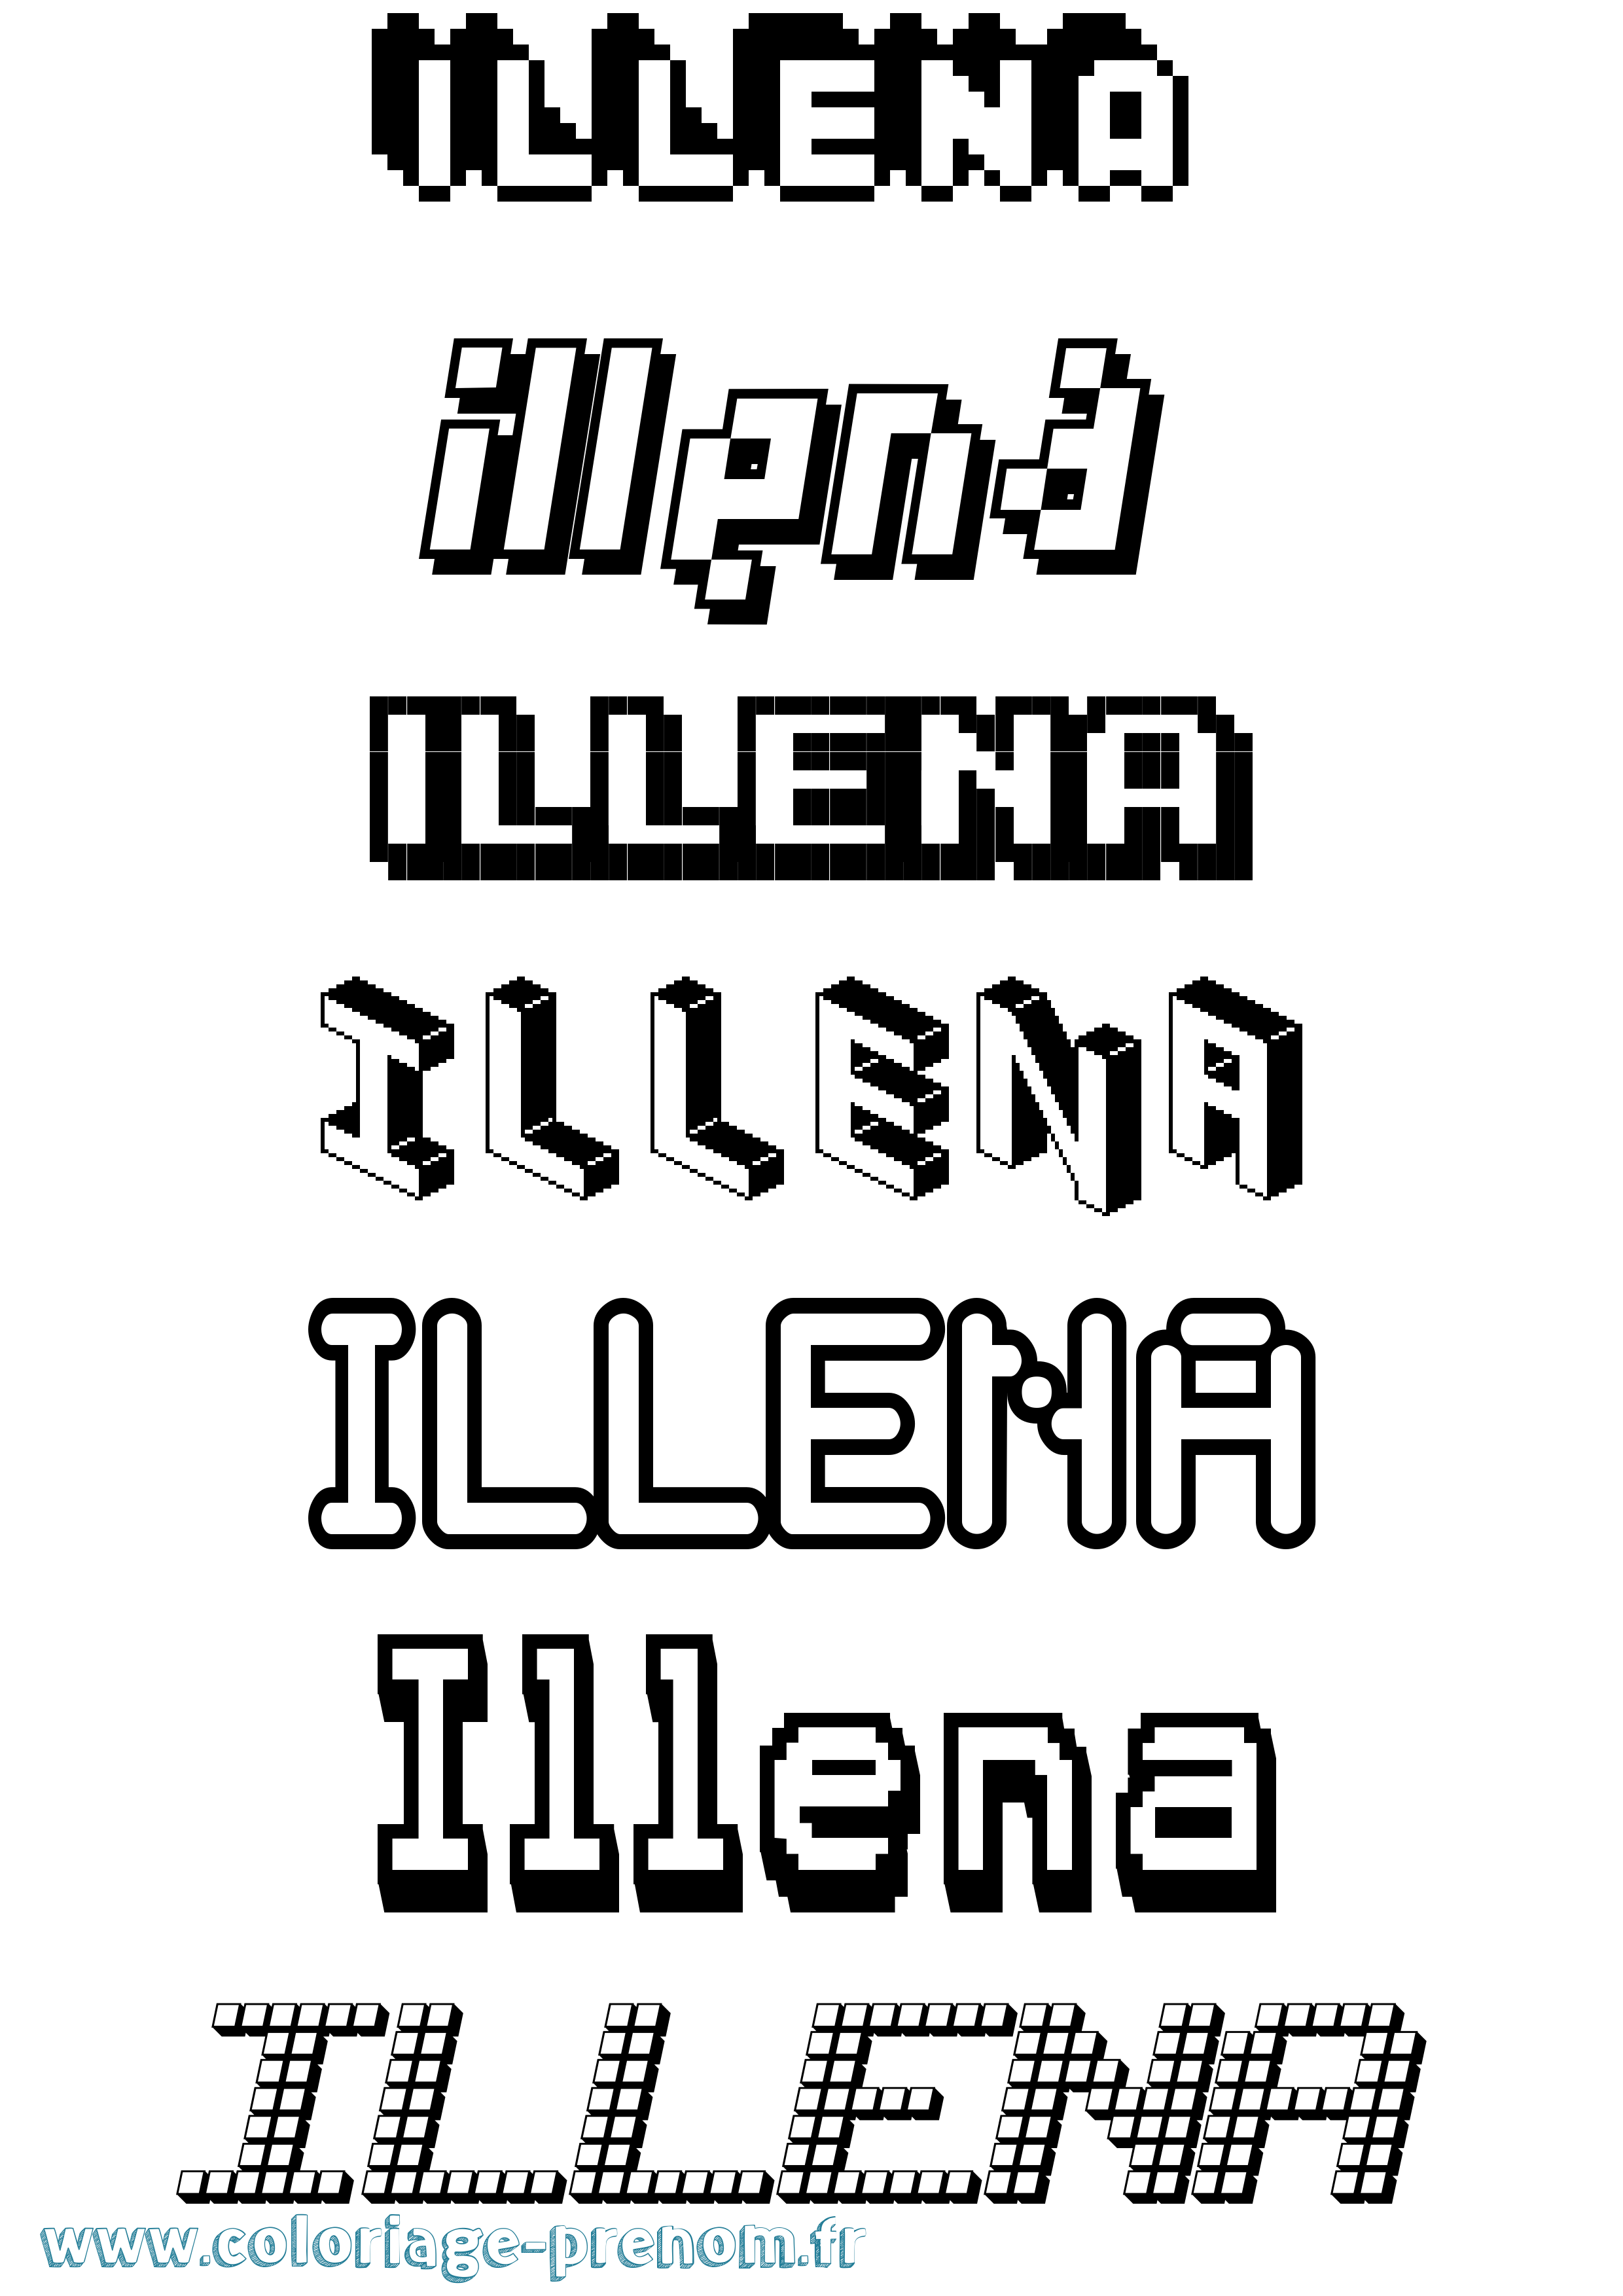 Coloriage prénom Illena Pixel